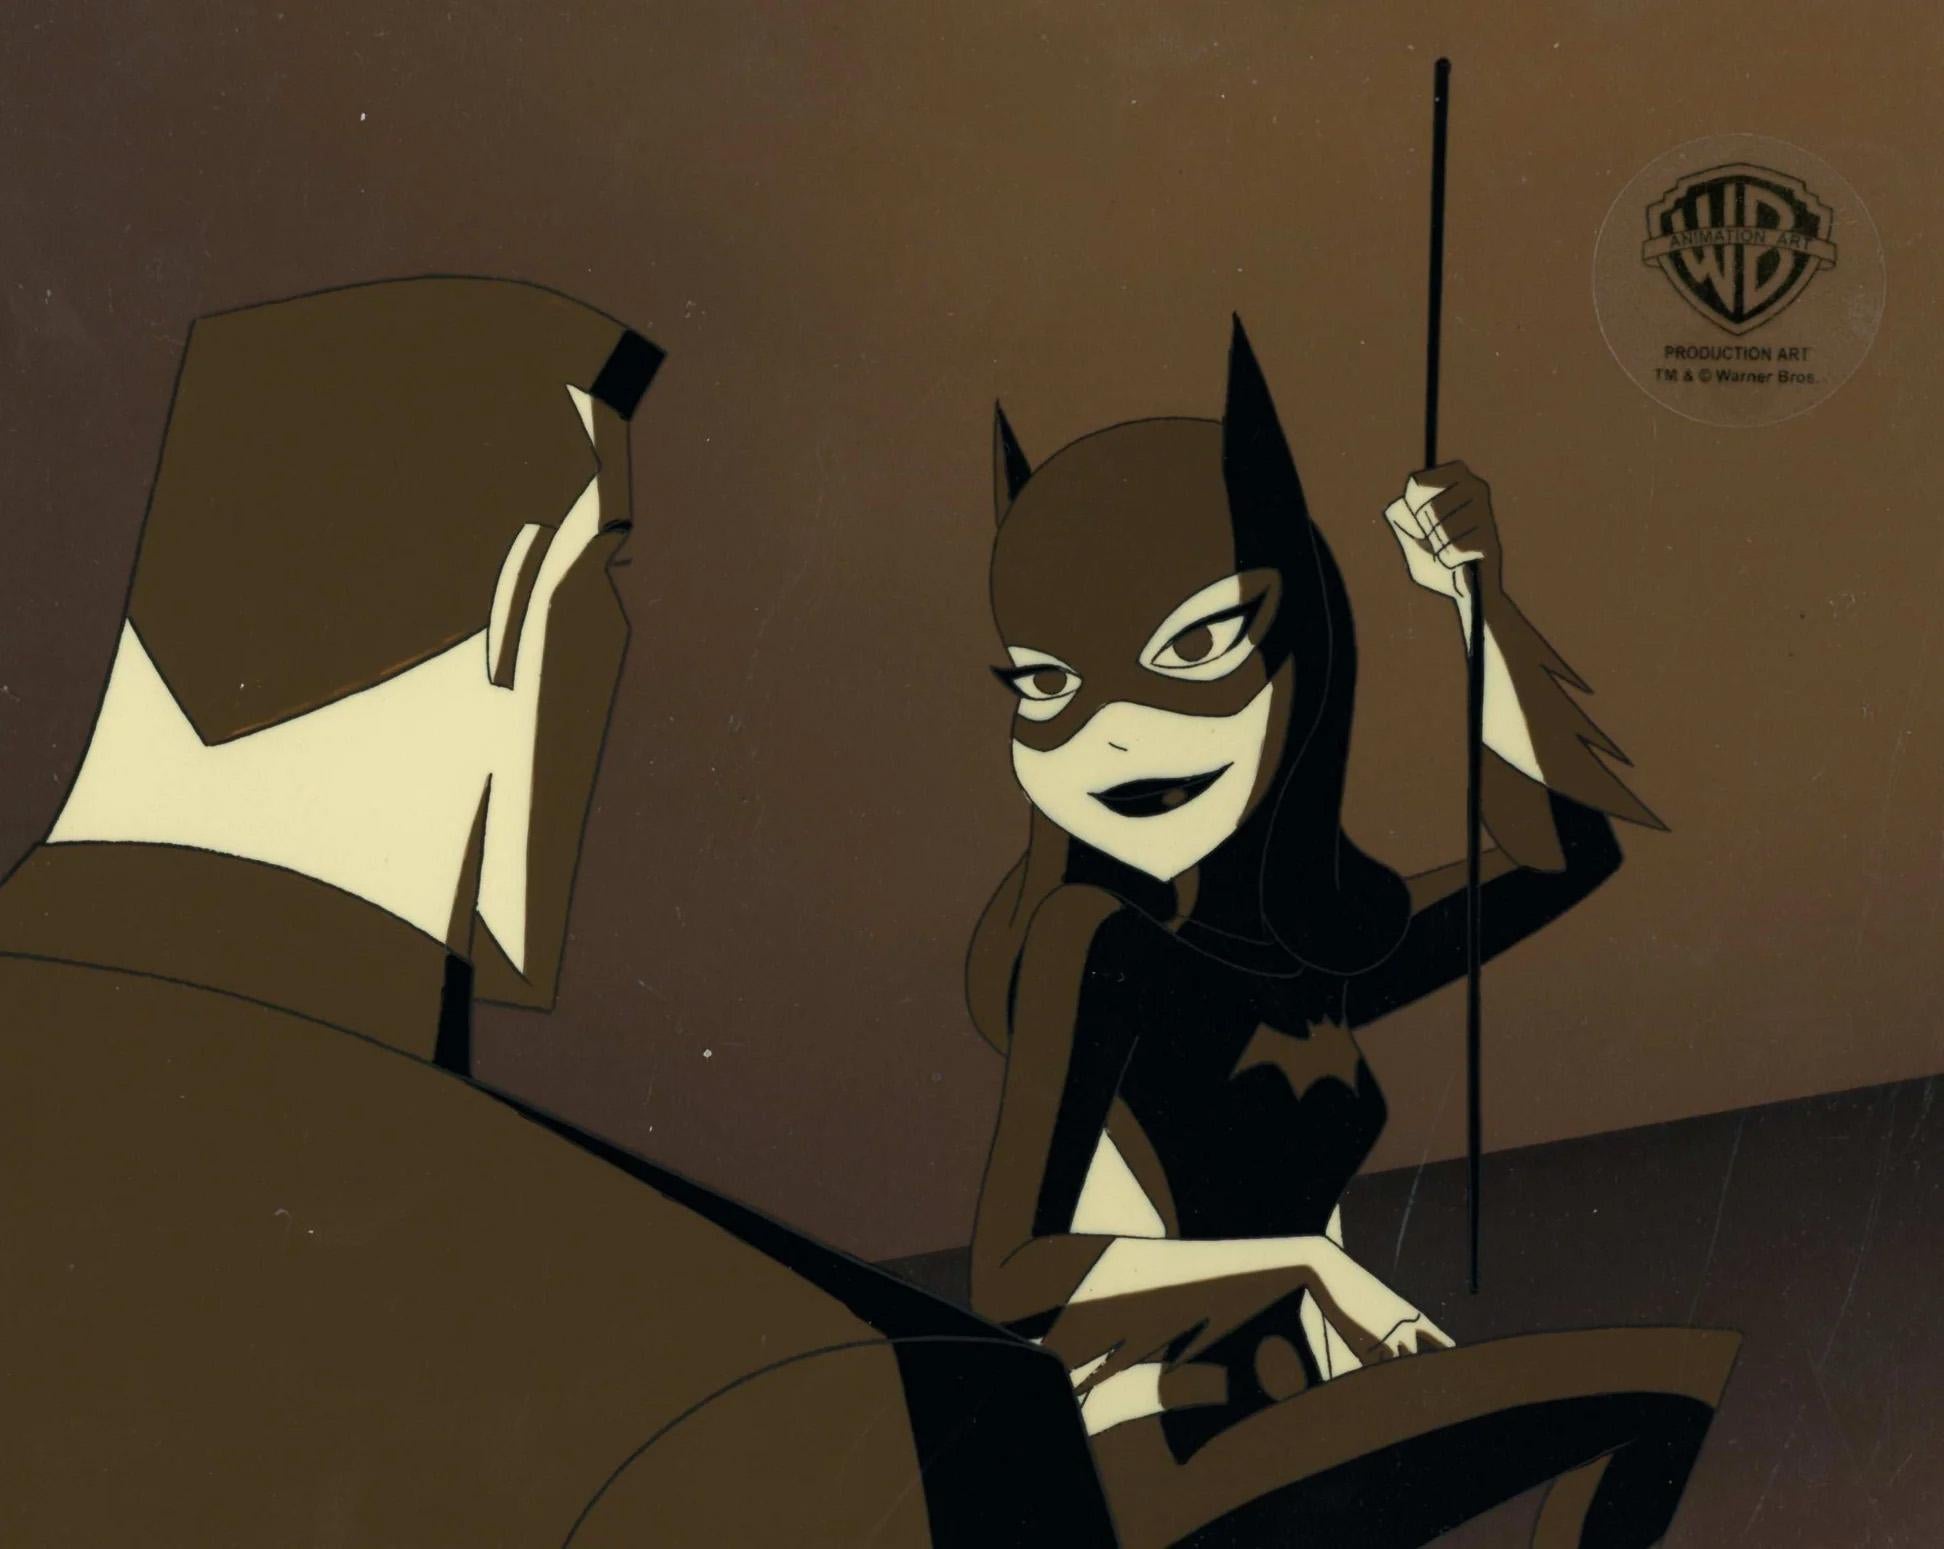 New Batman Adventures Original Cel and Background: Batgirl and Bruce Wayne - Art by DC Comics Studio Artists